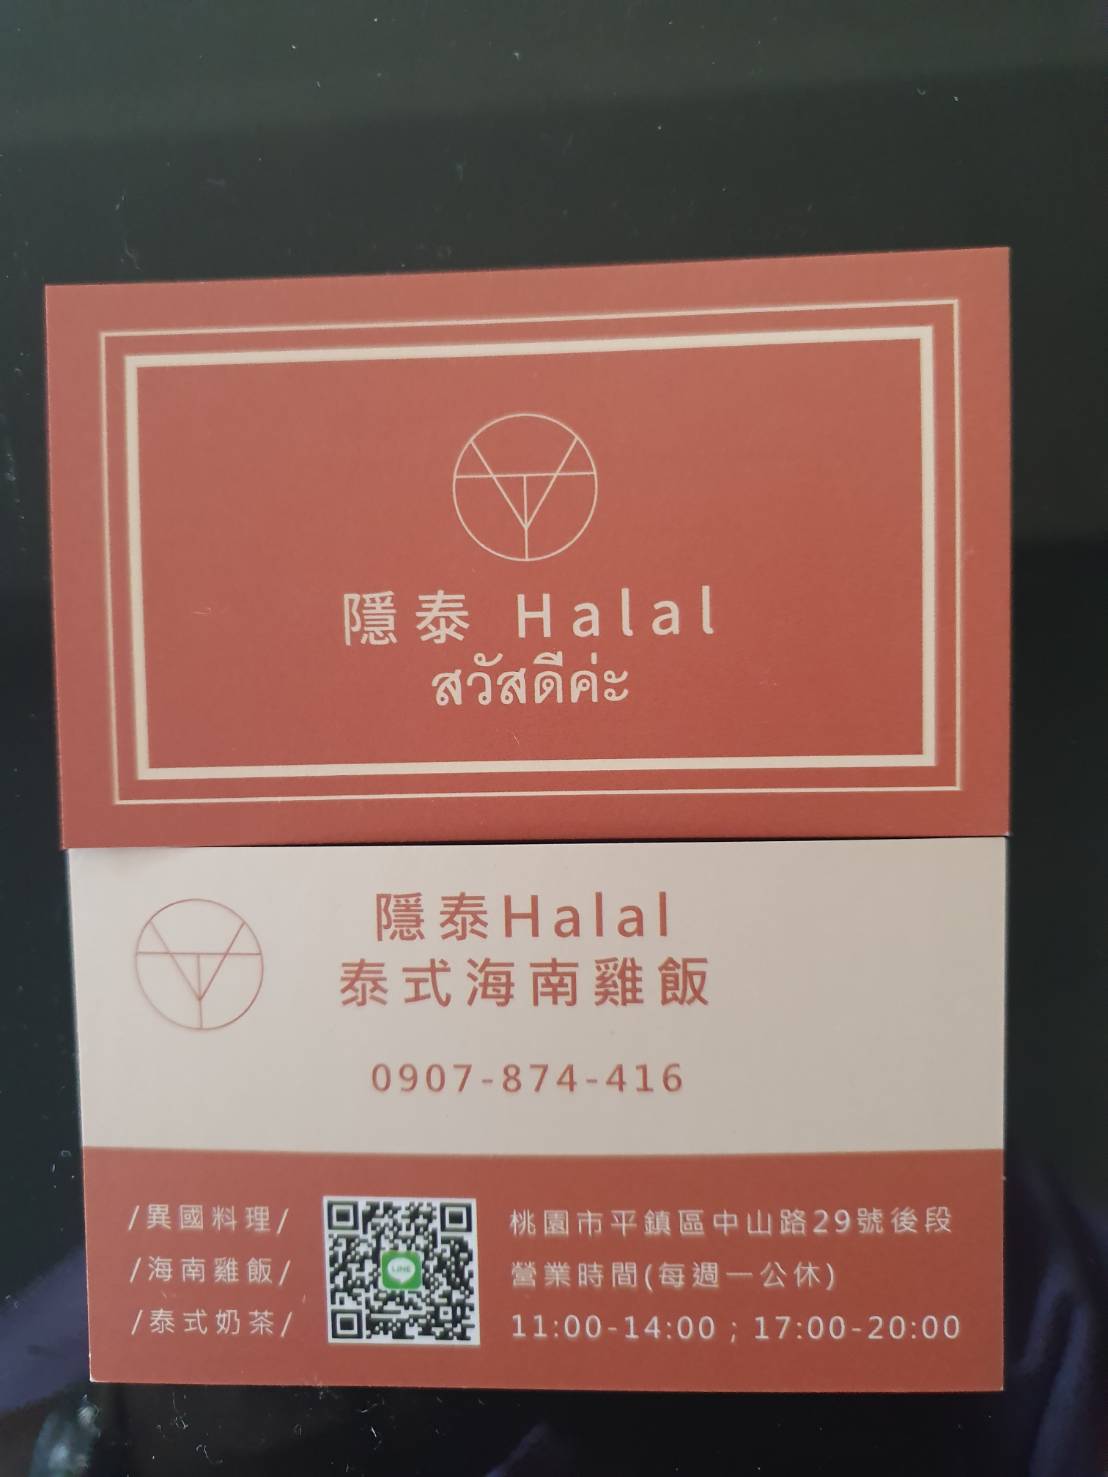 隱泰 Halal 泰式海南雞飯